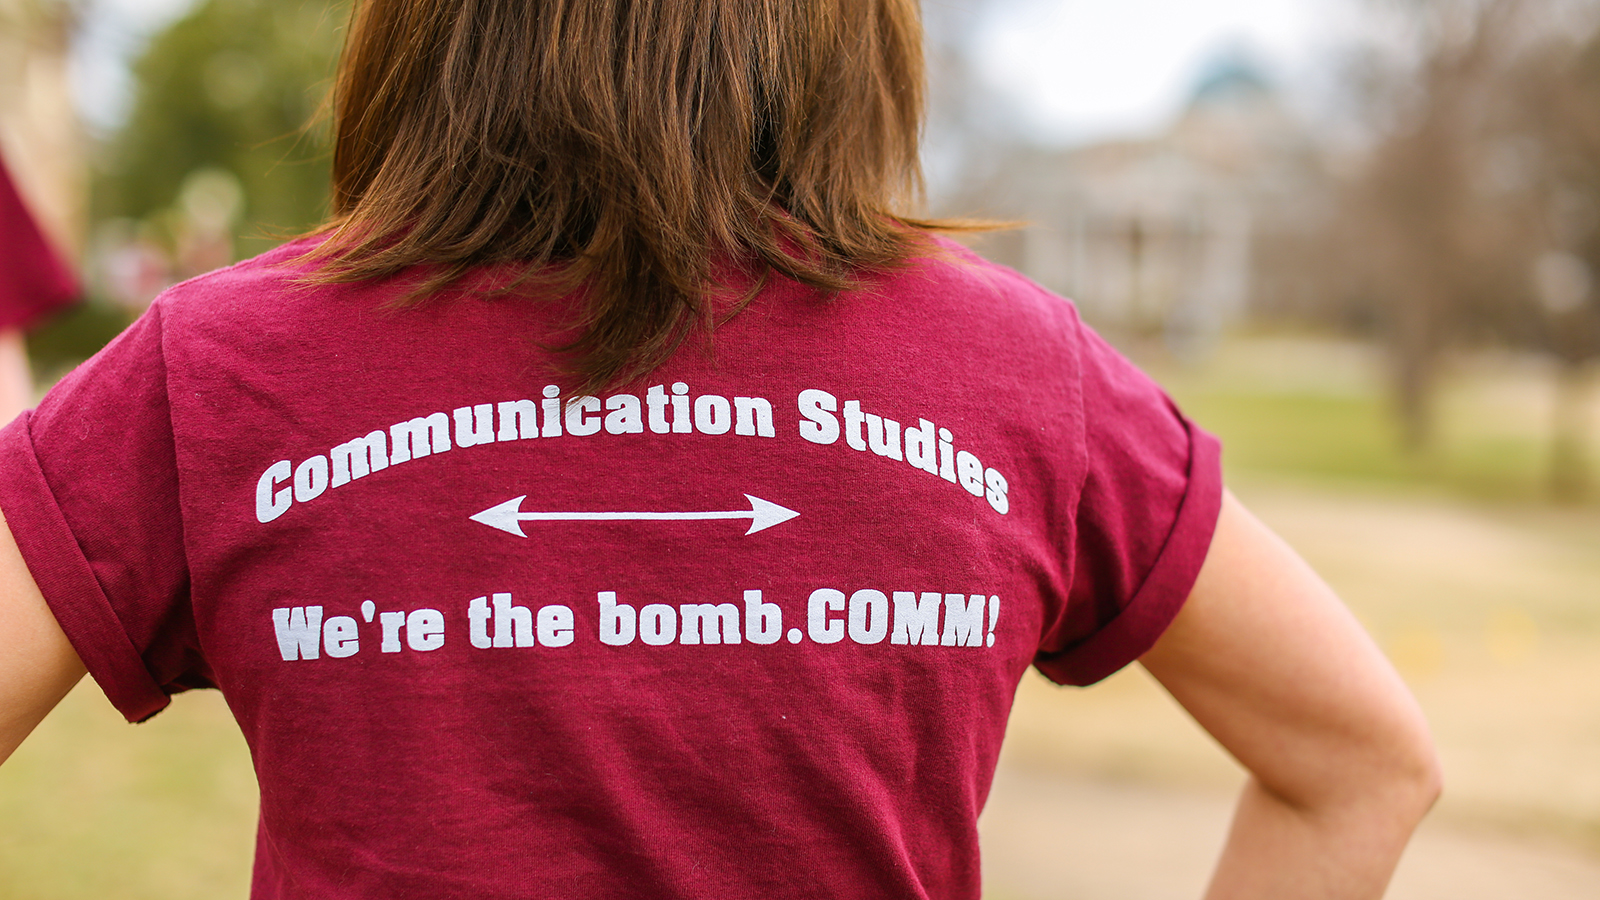 Communications studies shirt reading "the bomb.com" 